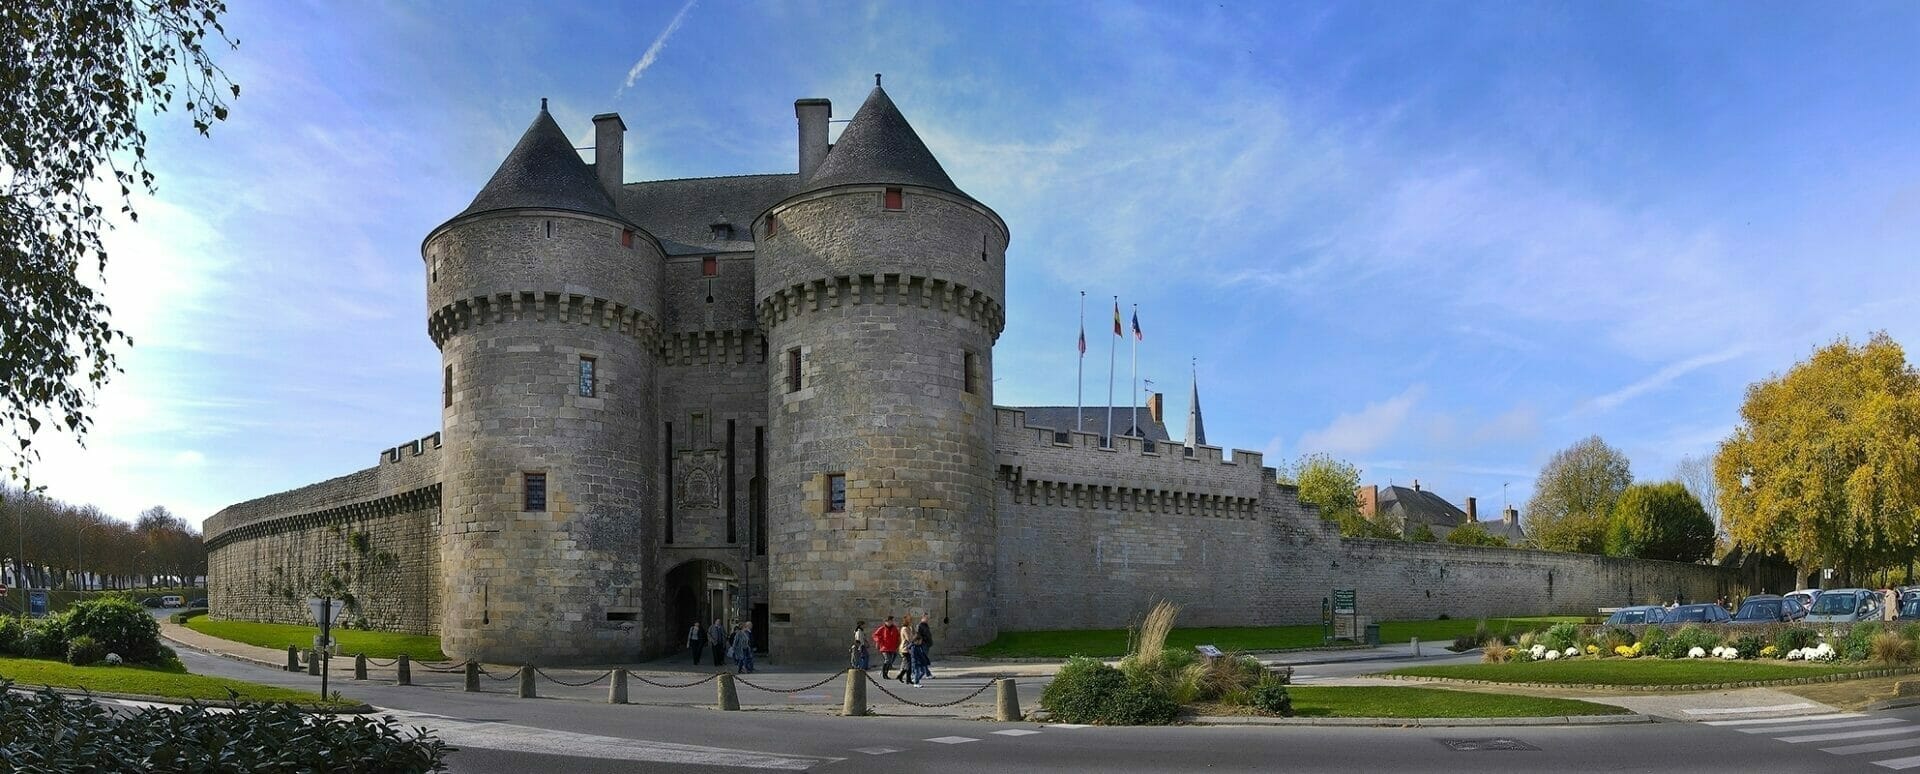 La ville fortifiée de Guérande